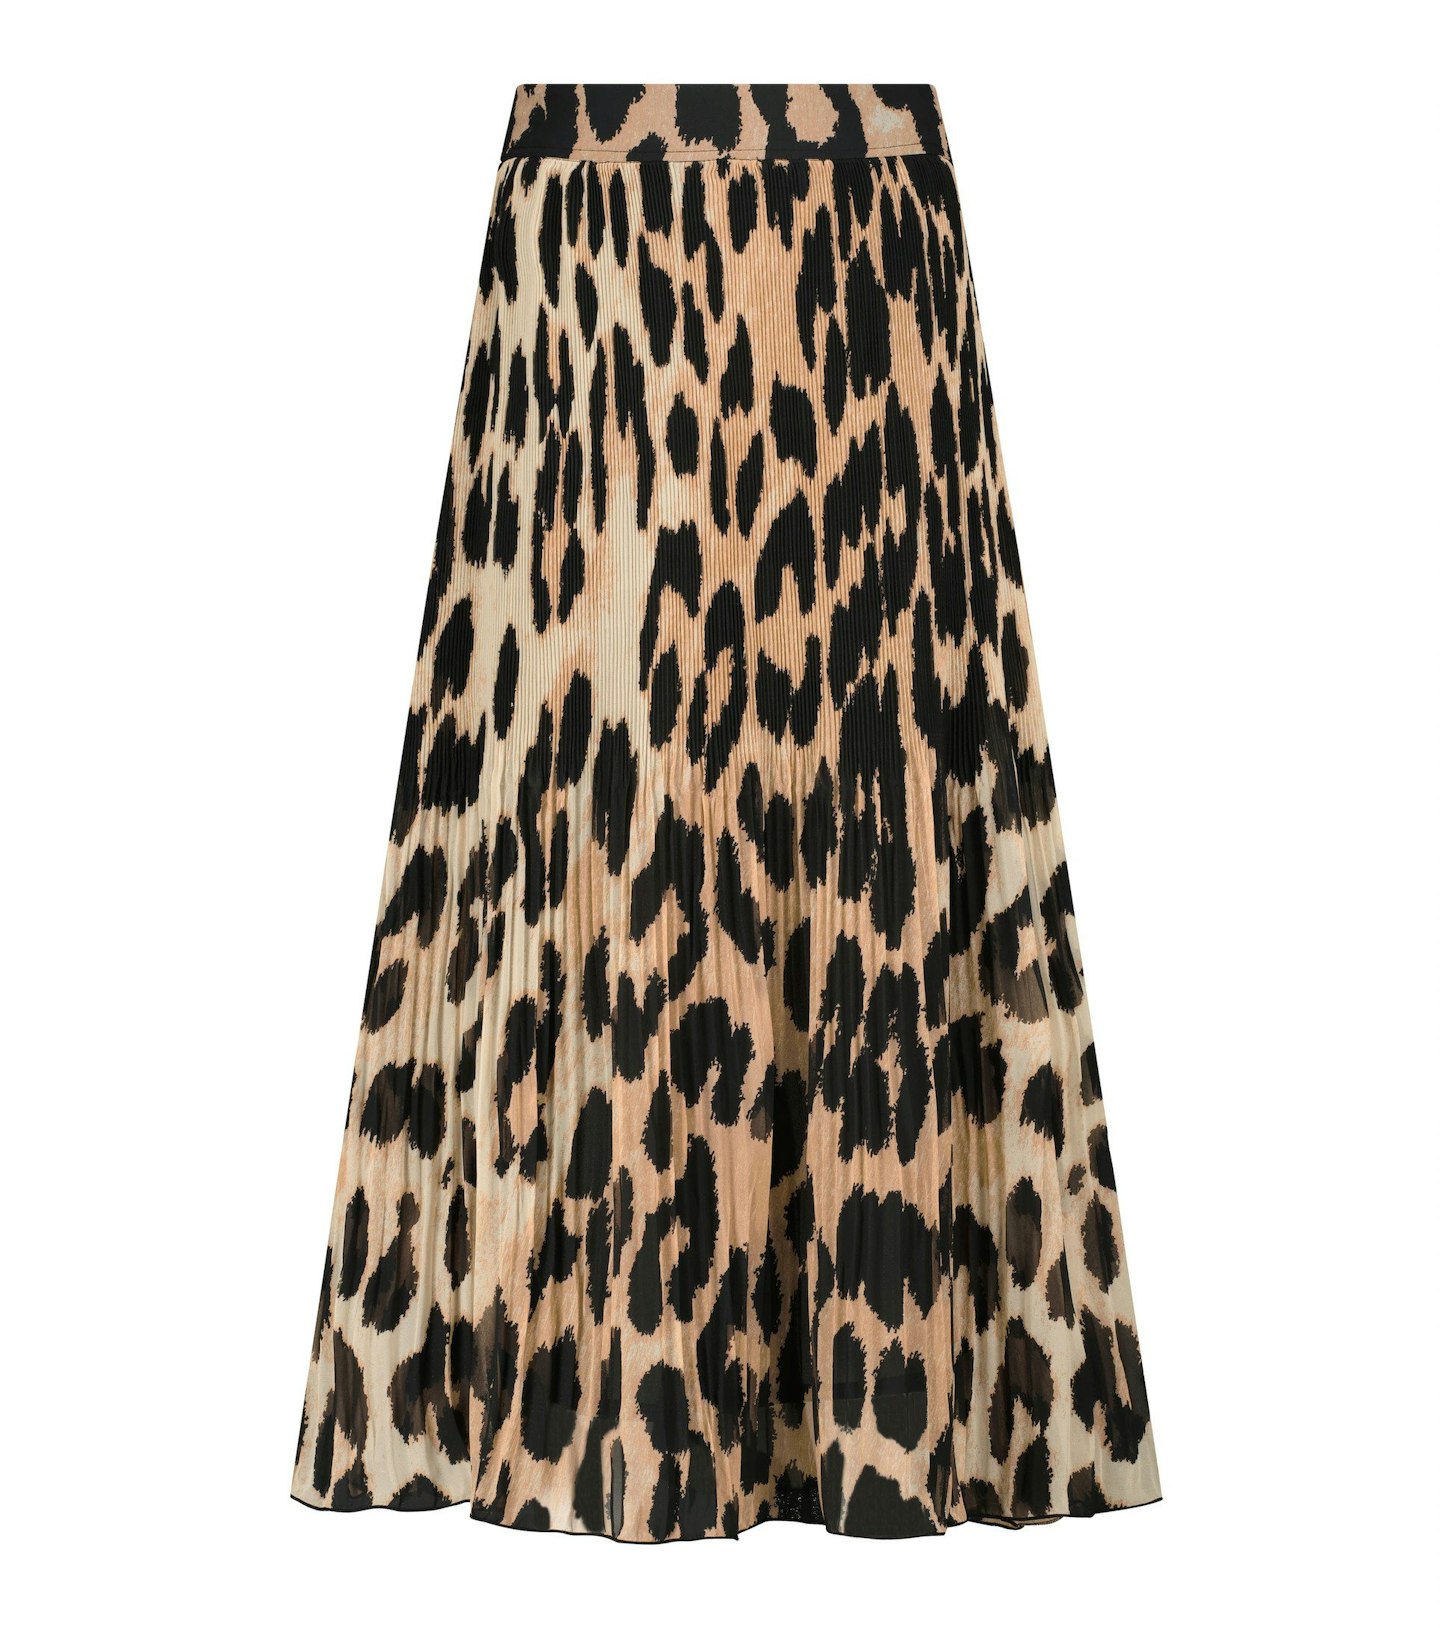 Ganni, Leopard-print georgette midi skirt, £165 at MyTheresa